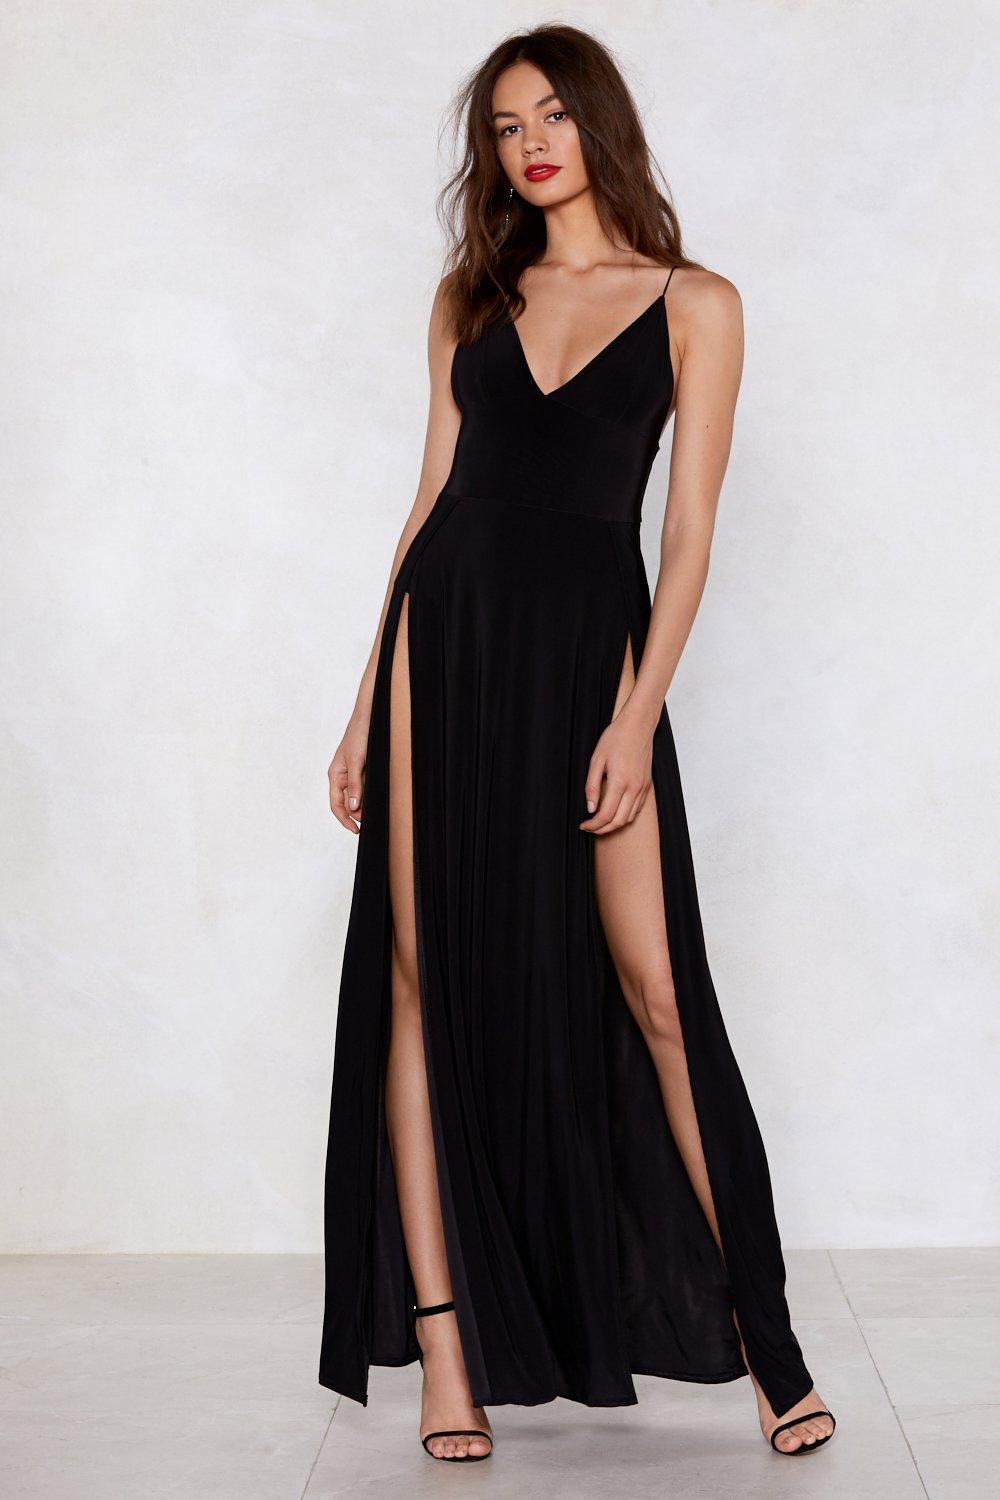 slit dress – Fashion dresses